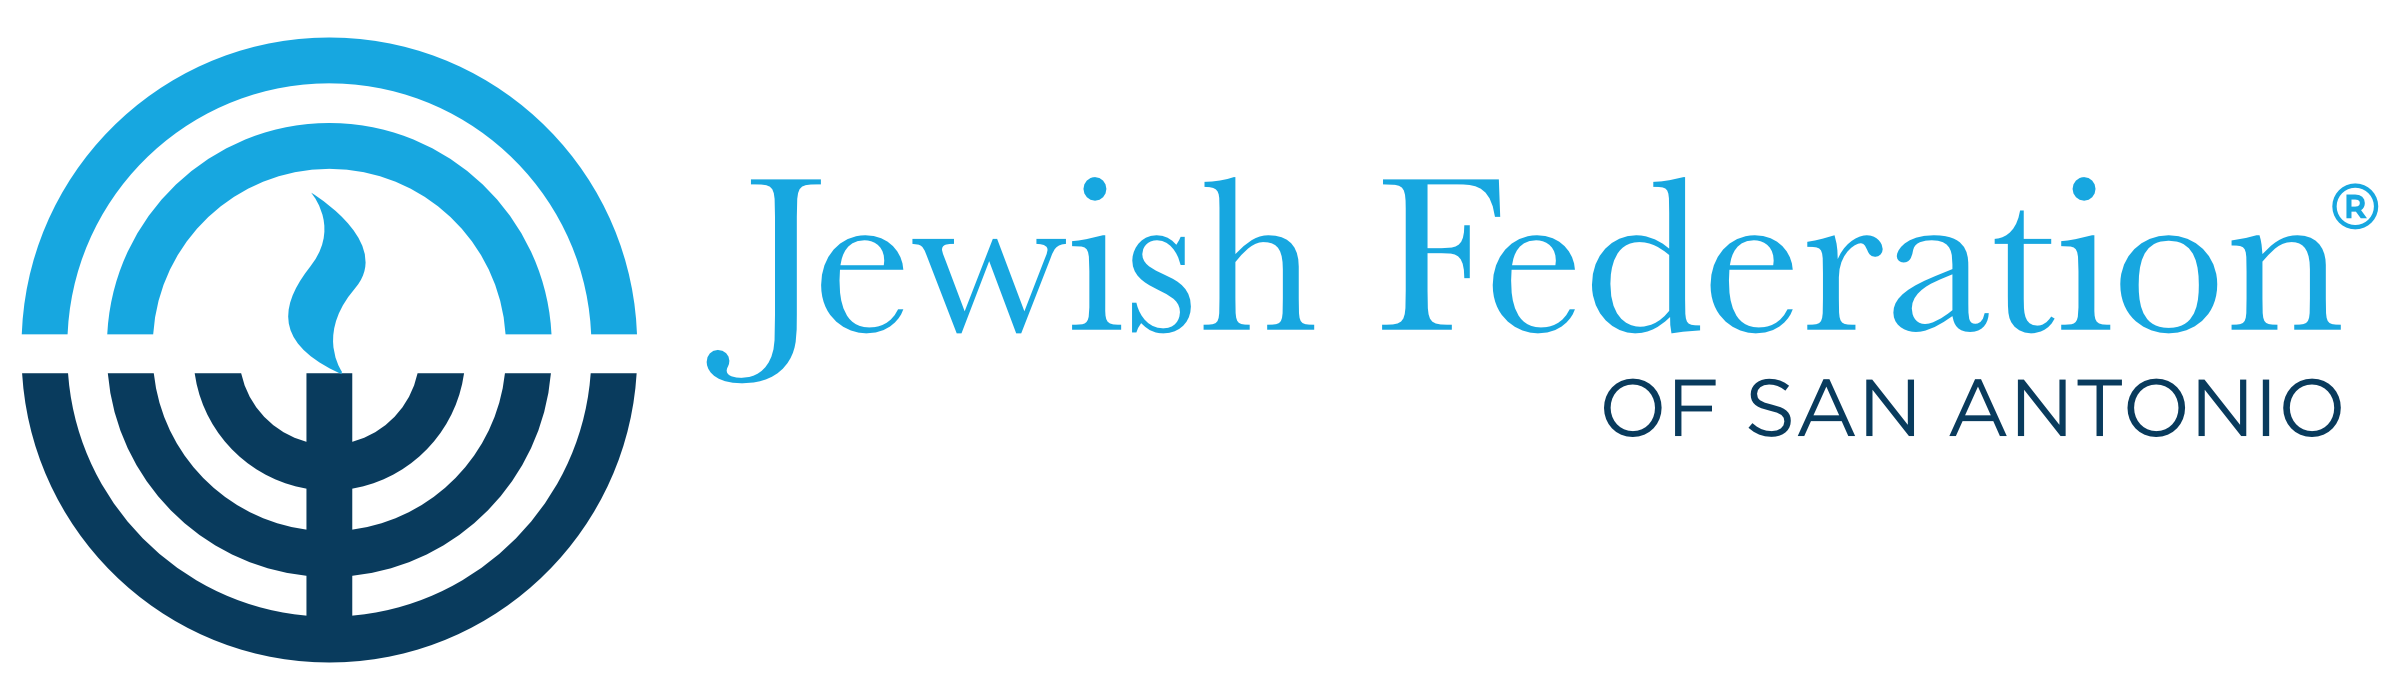 Jewish Fed. San Antonio - logo